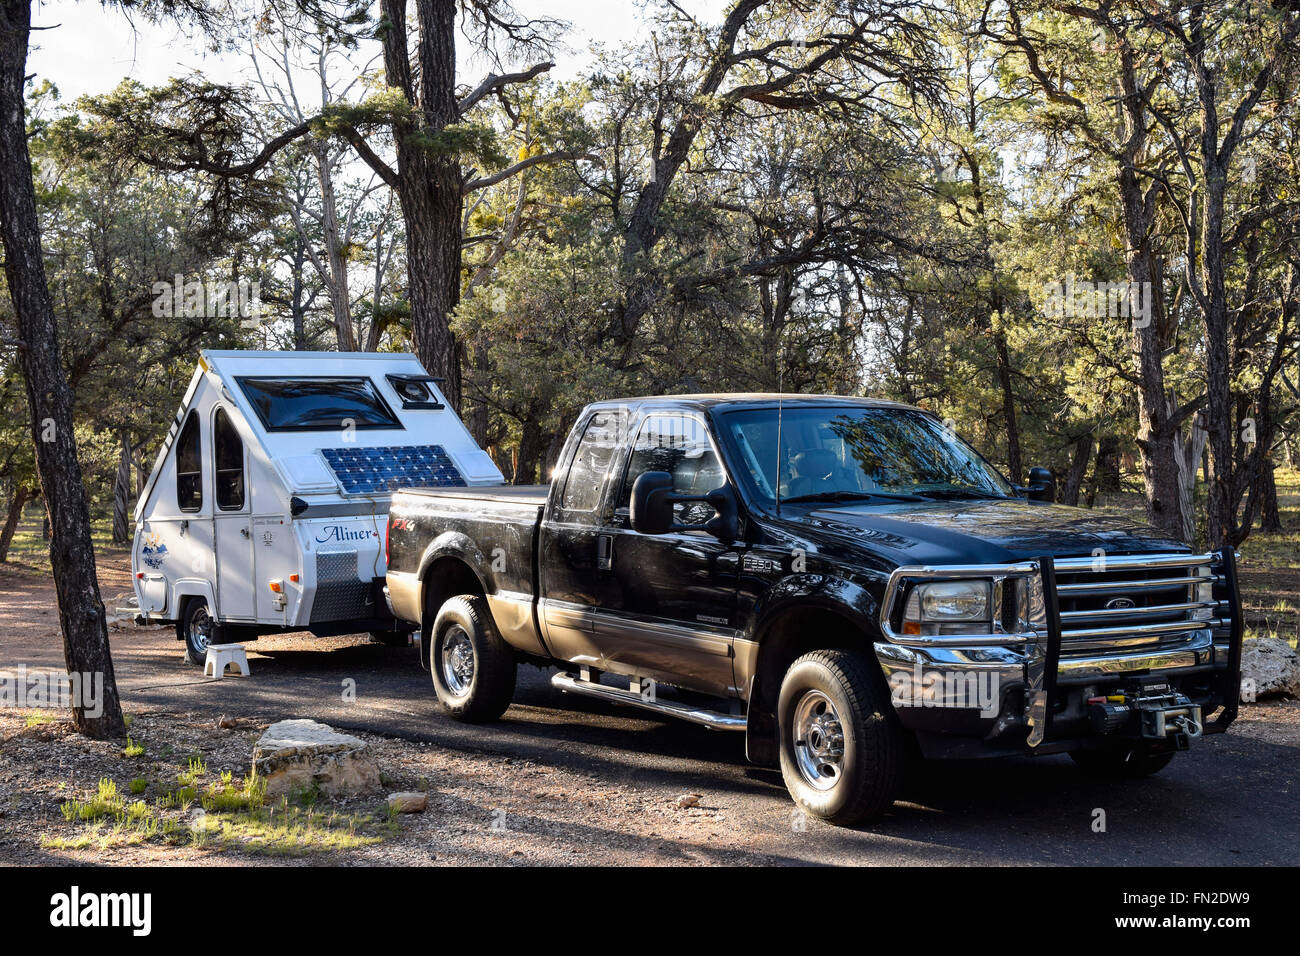 GRAND CANYON NATIONAL PARK, USA, May 29, 2015: Teardrop camping trailer and pick-up truck at a Grand Canyon campground. Stock Photo